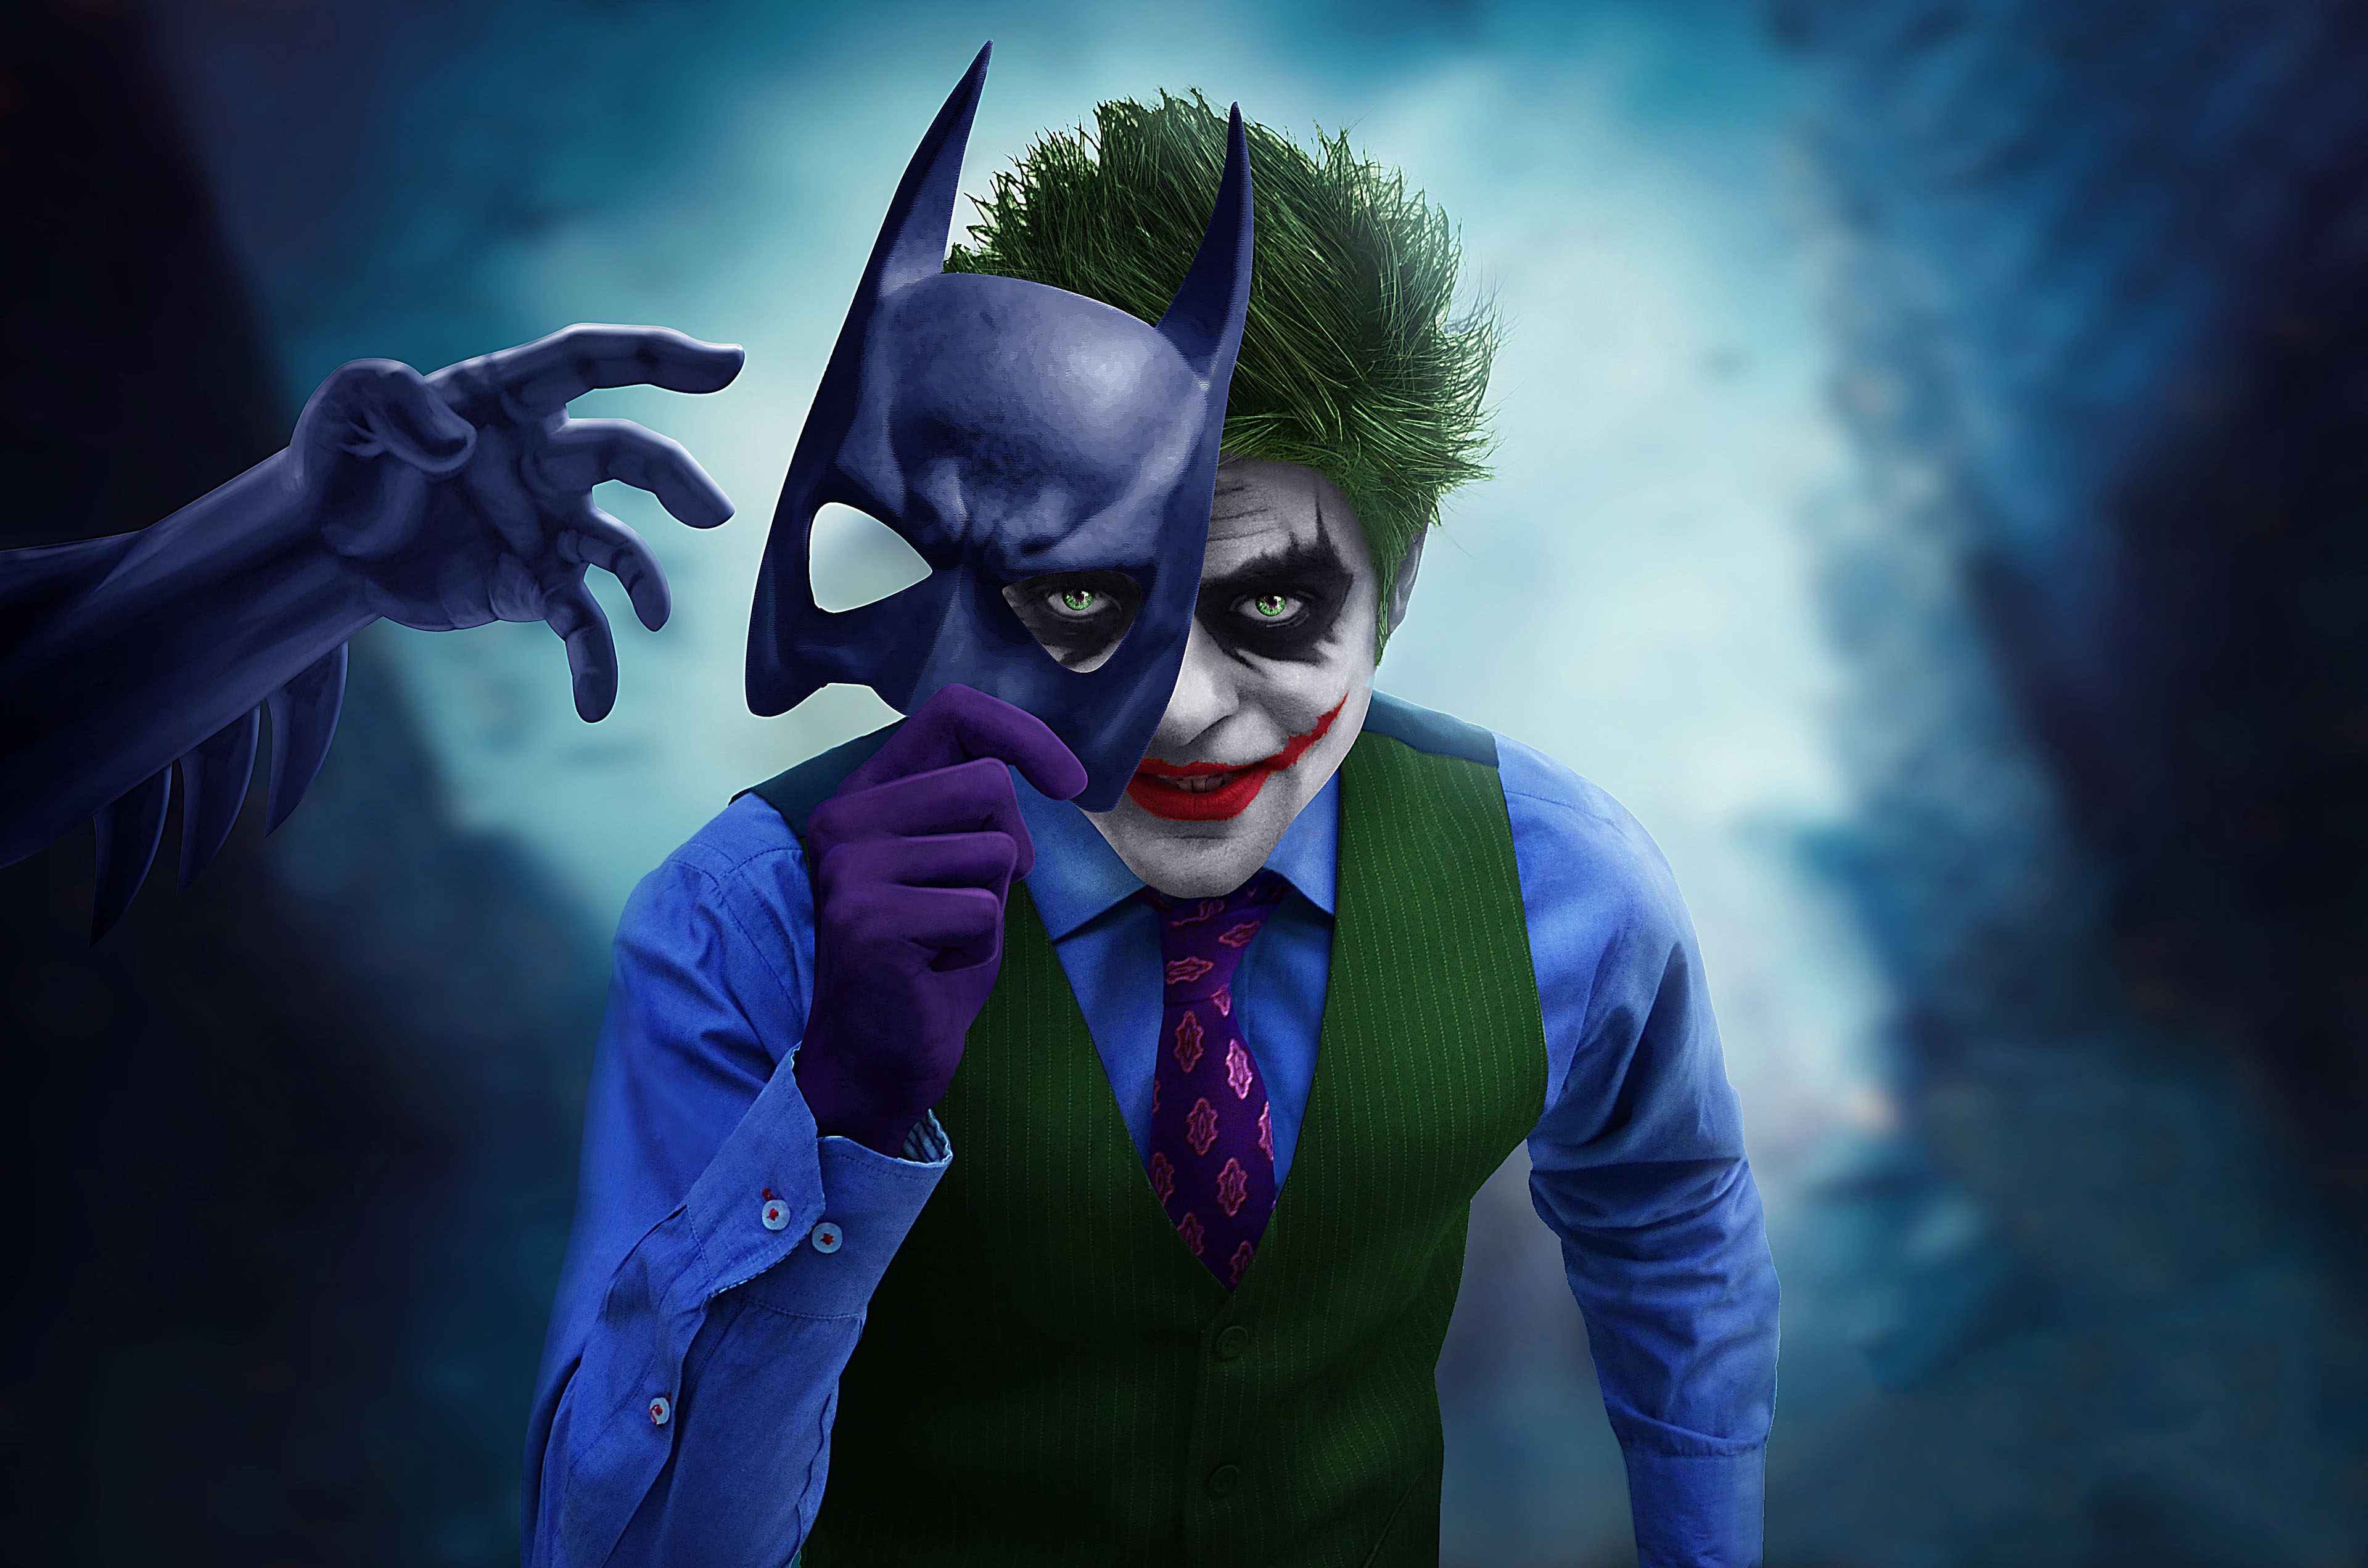 Joker With Batman Mask Off, HD Superheroes, 4k Wallpaper, Image